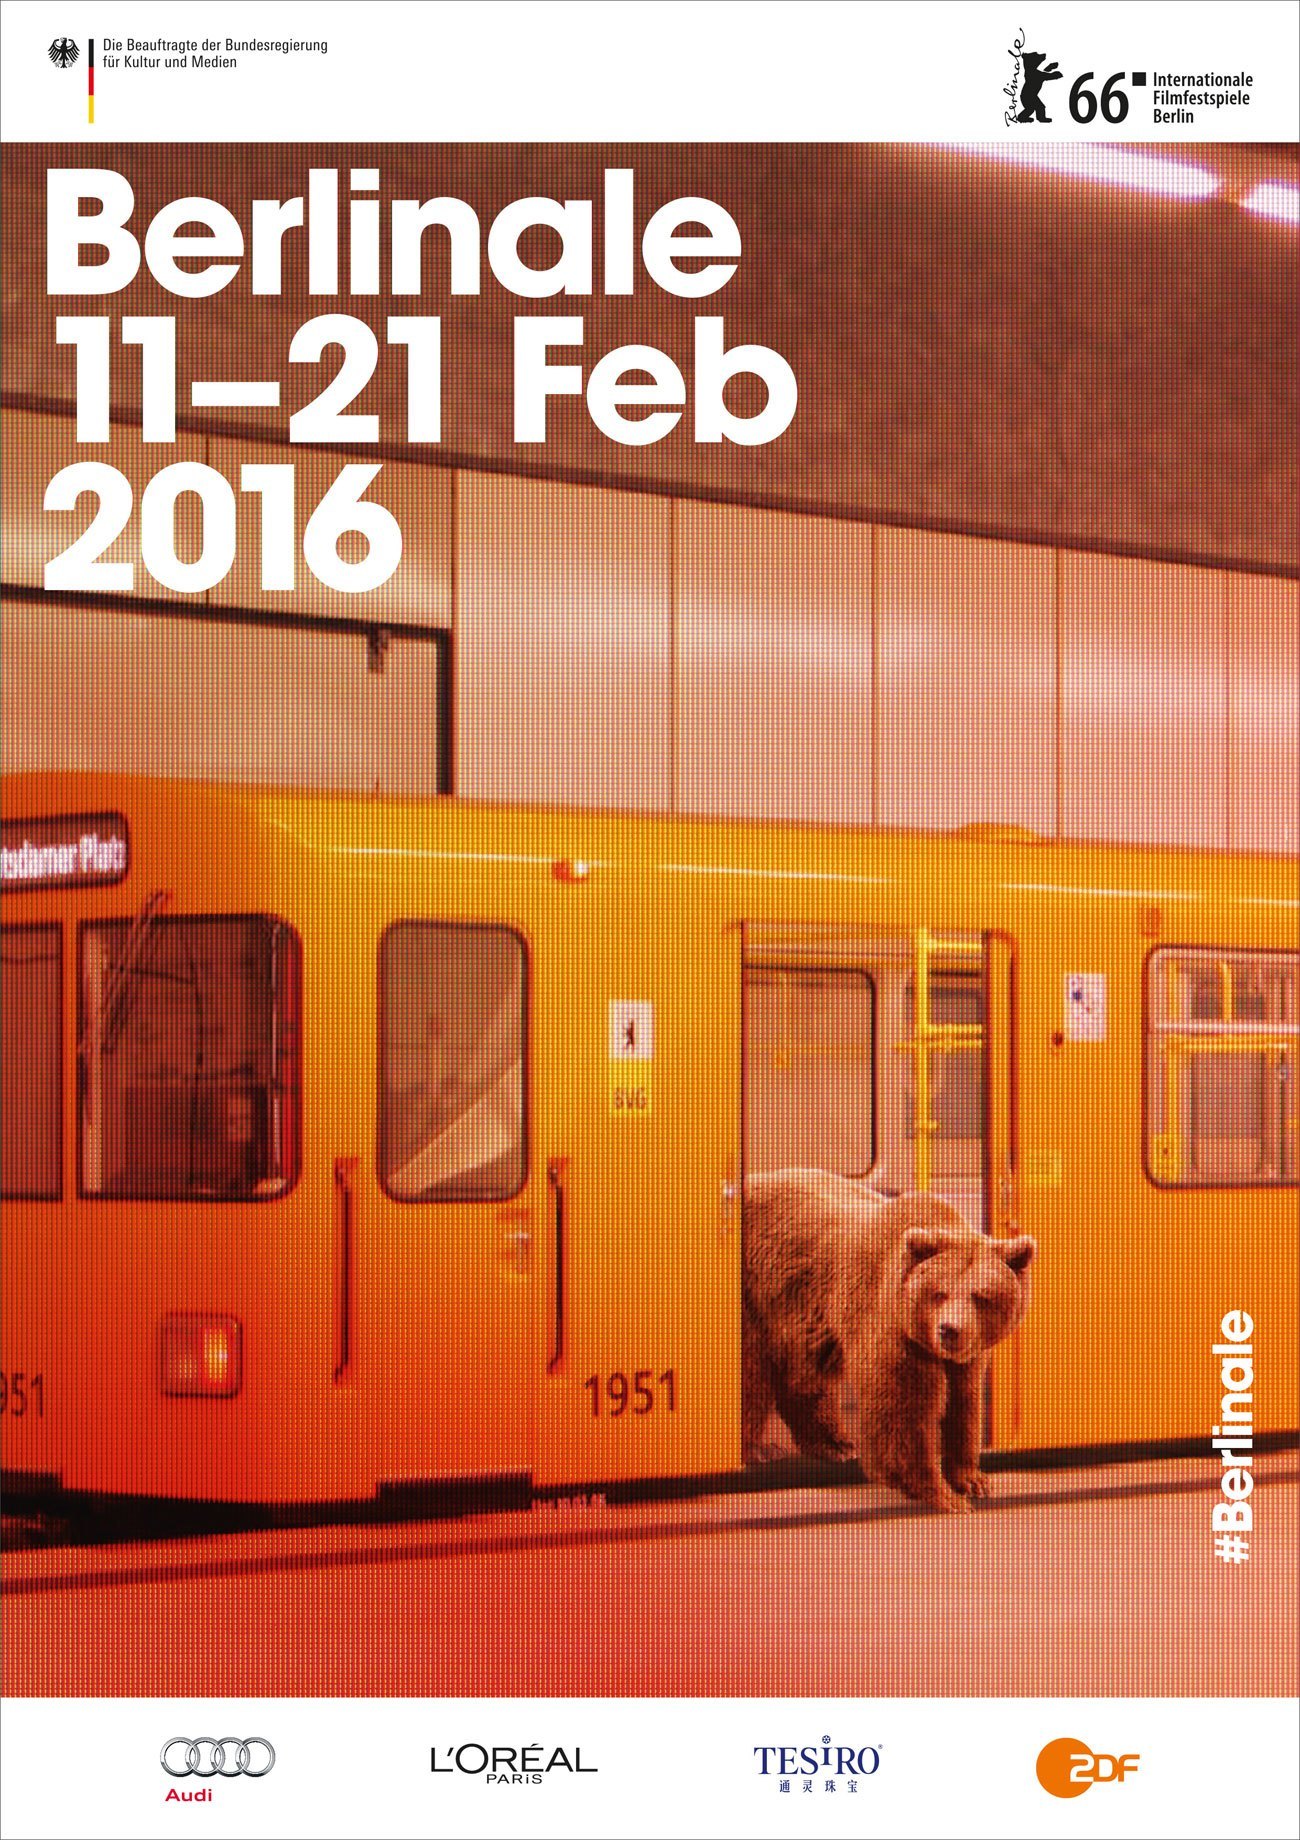 Festivalplakat zur Berlinale 2016